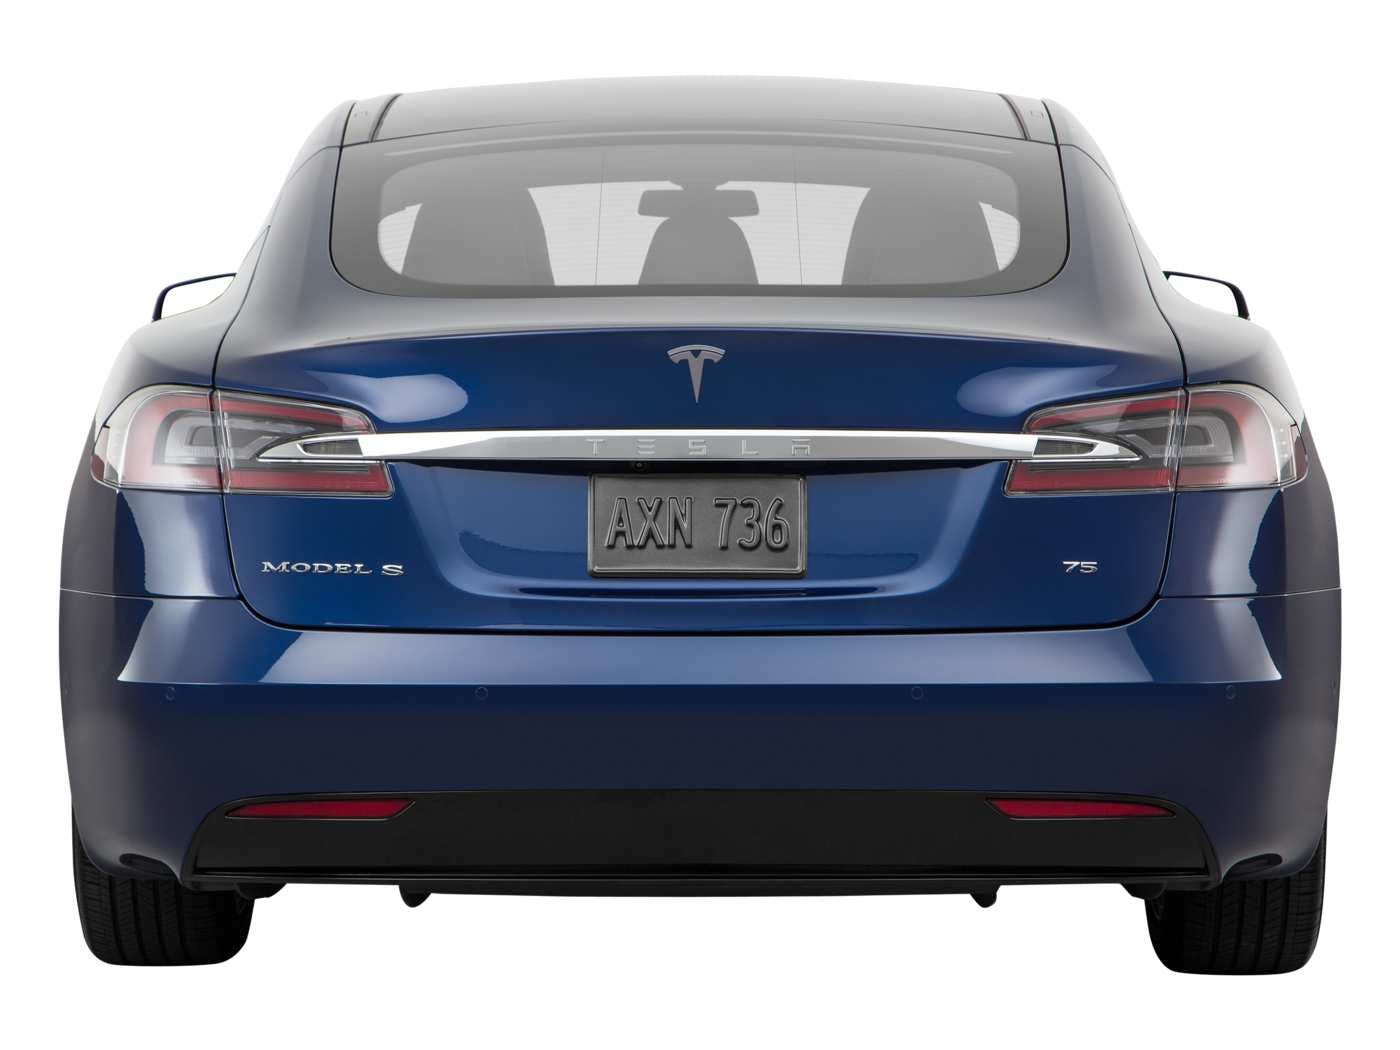 2018 Tesla Model S Price, Value, Ratings & Reviews